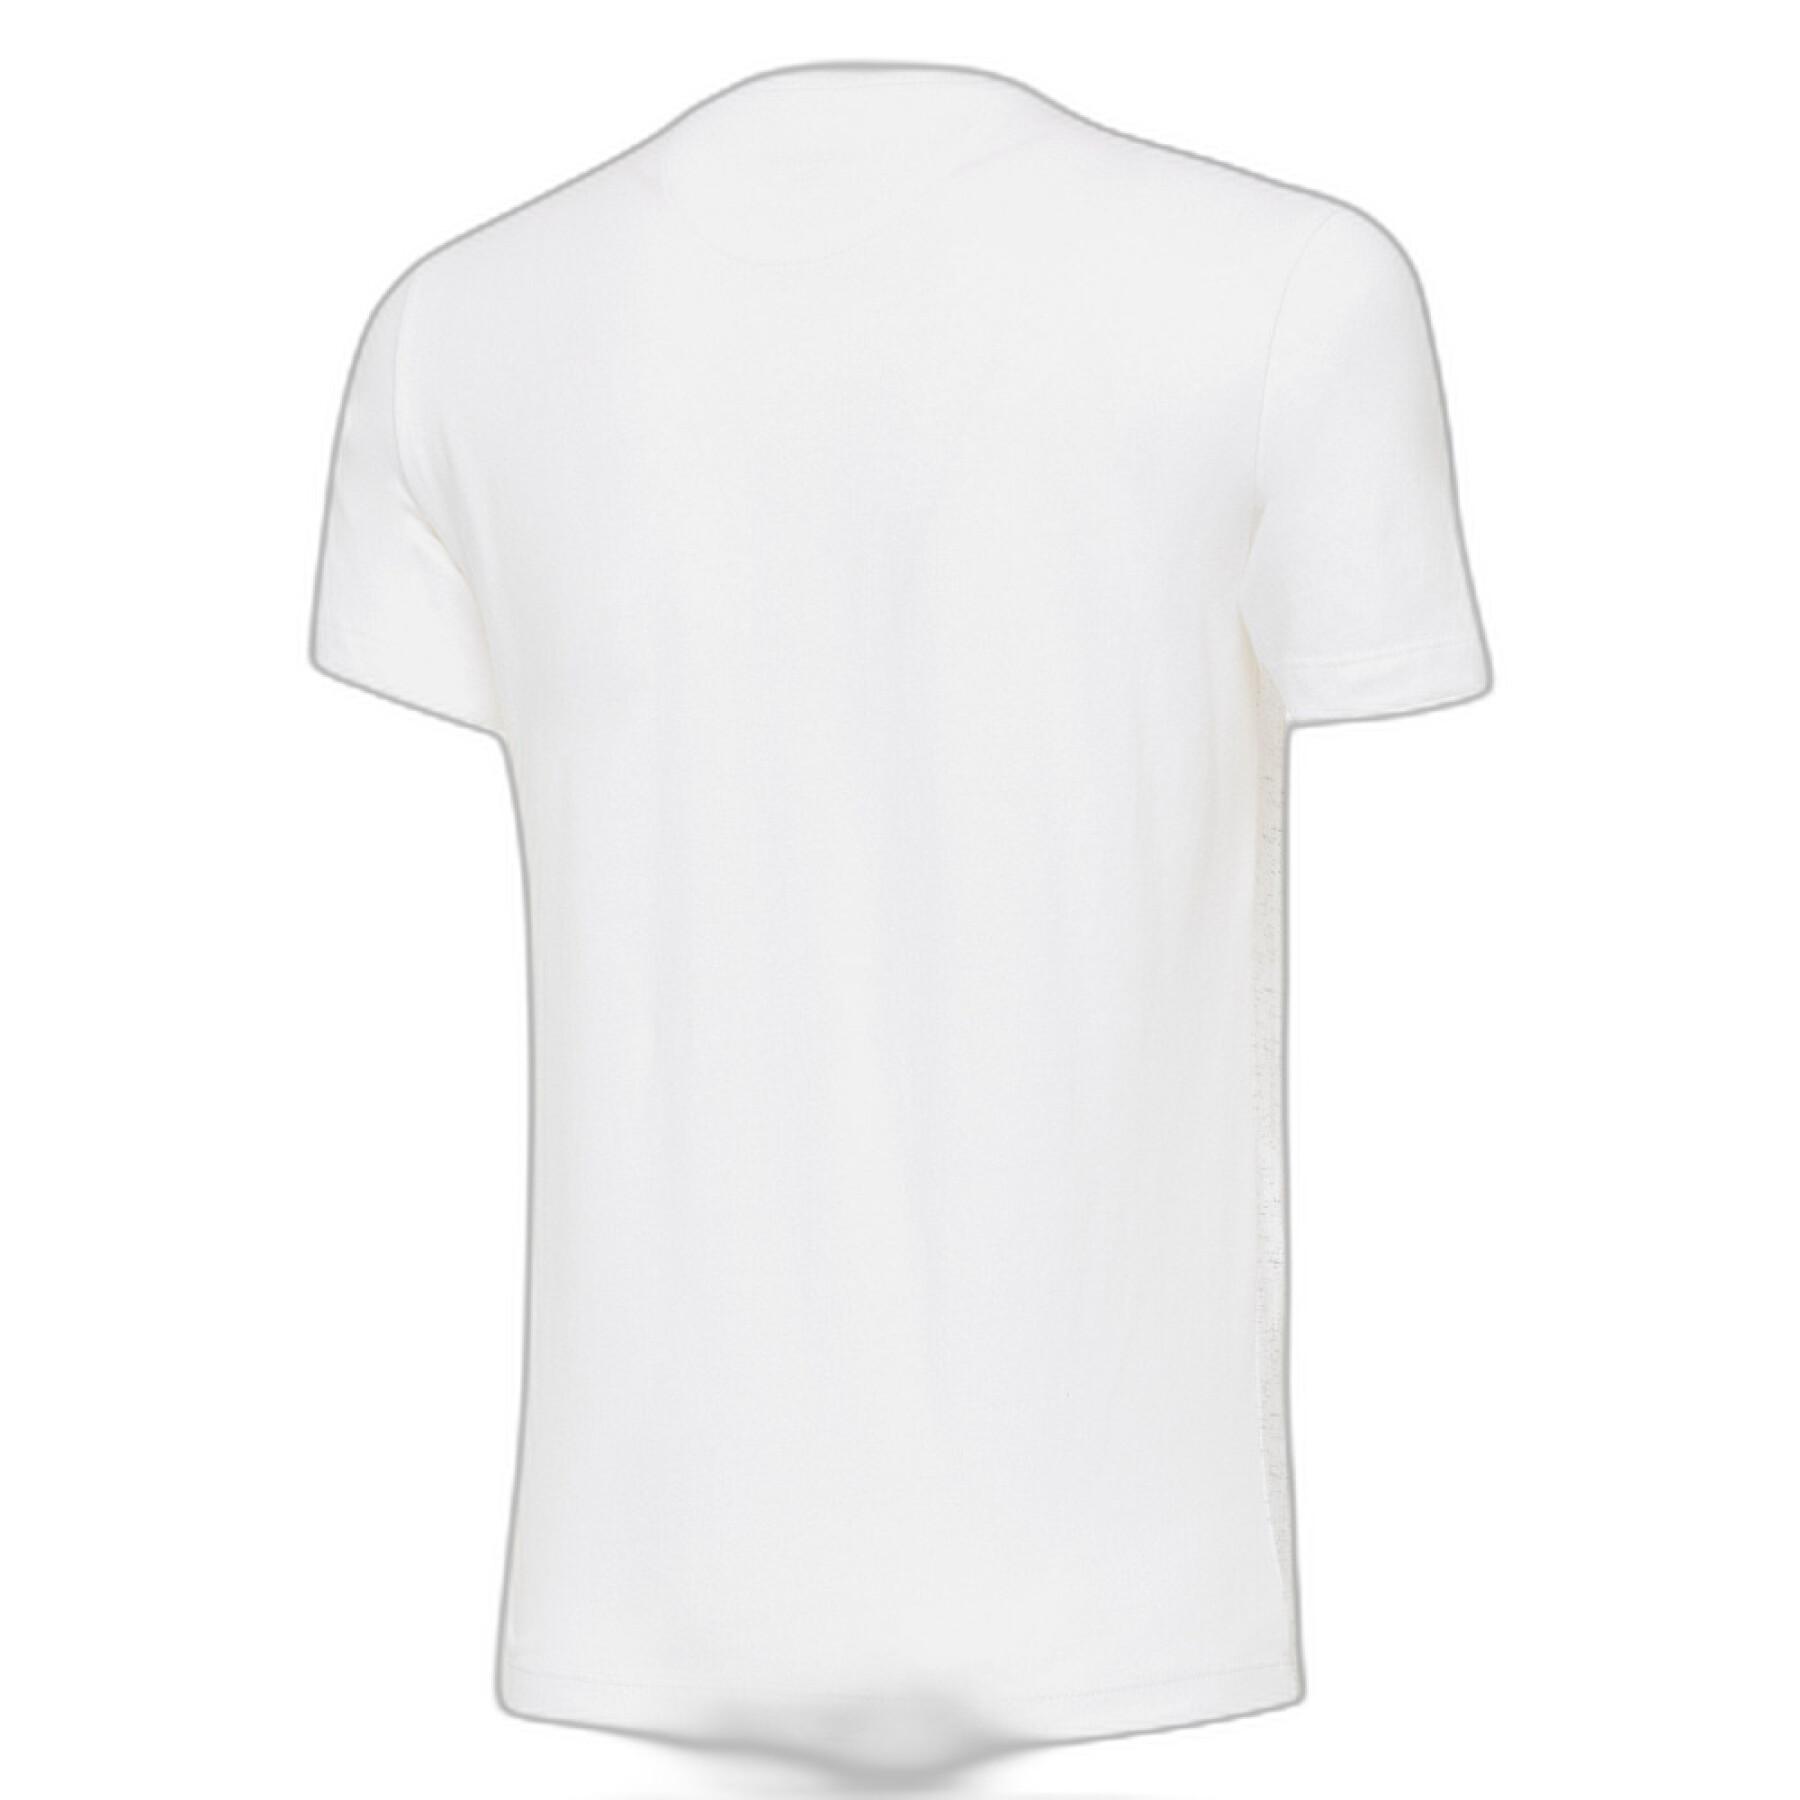 Camiseta de algodón para niños Udinese